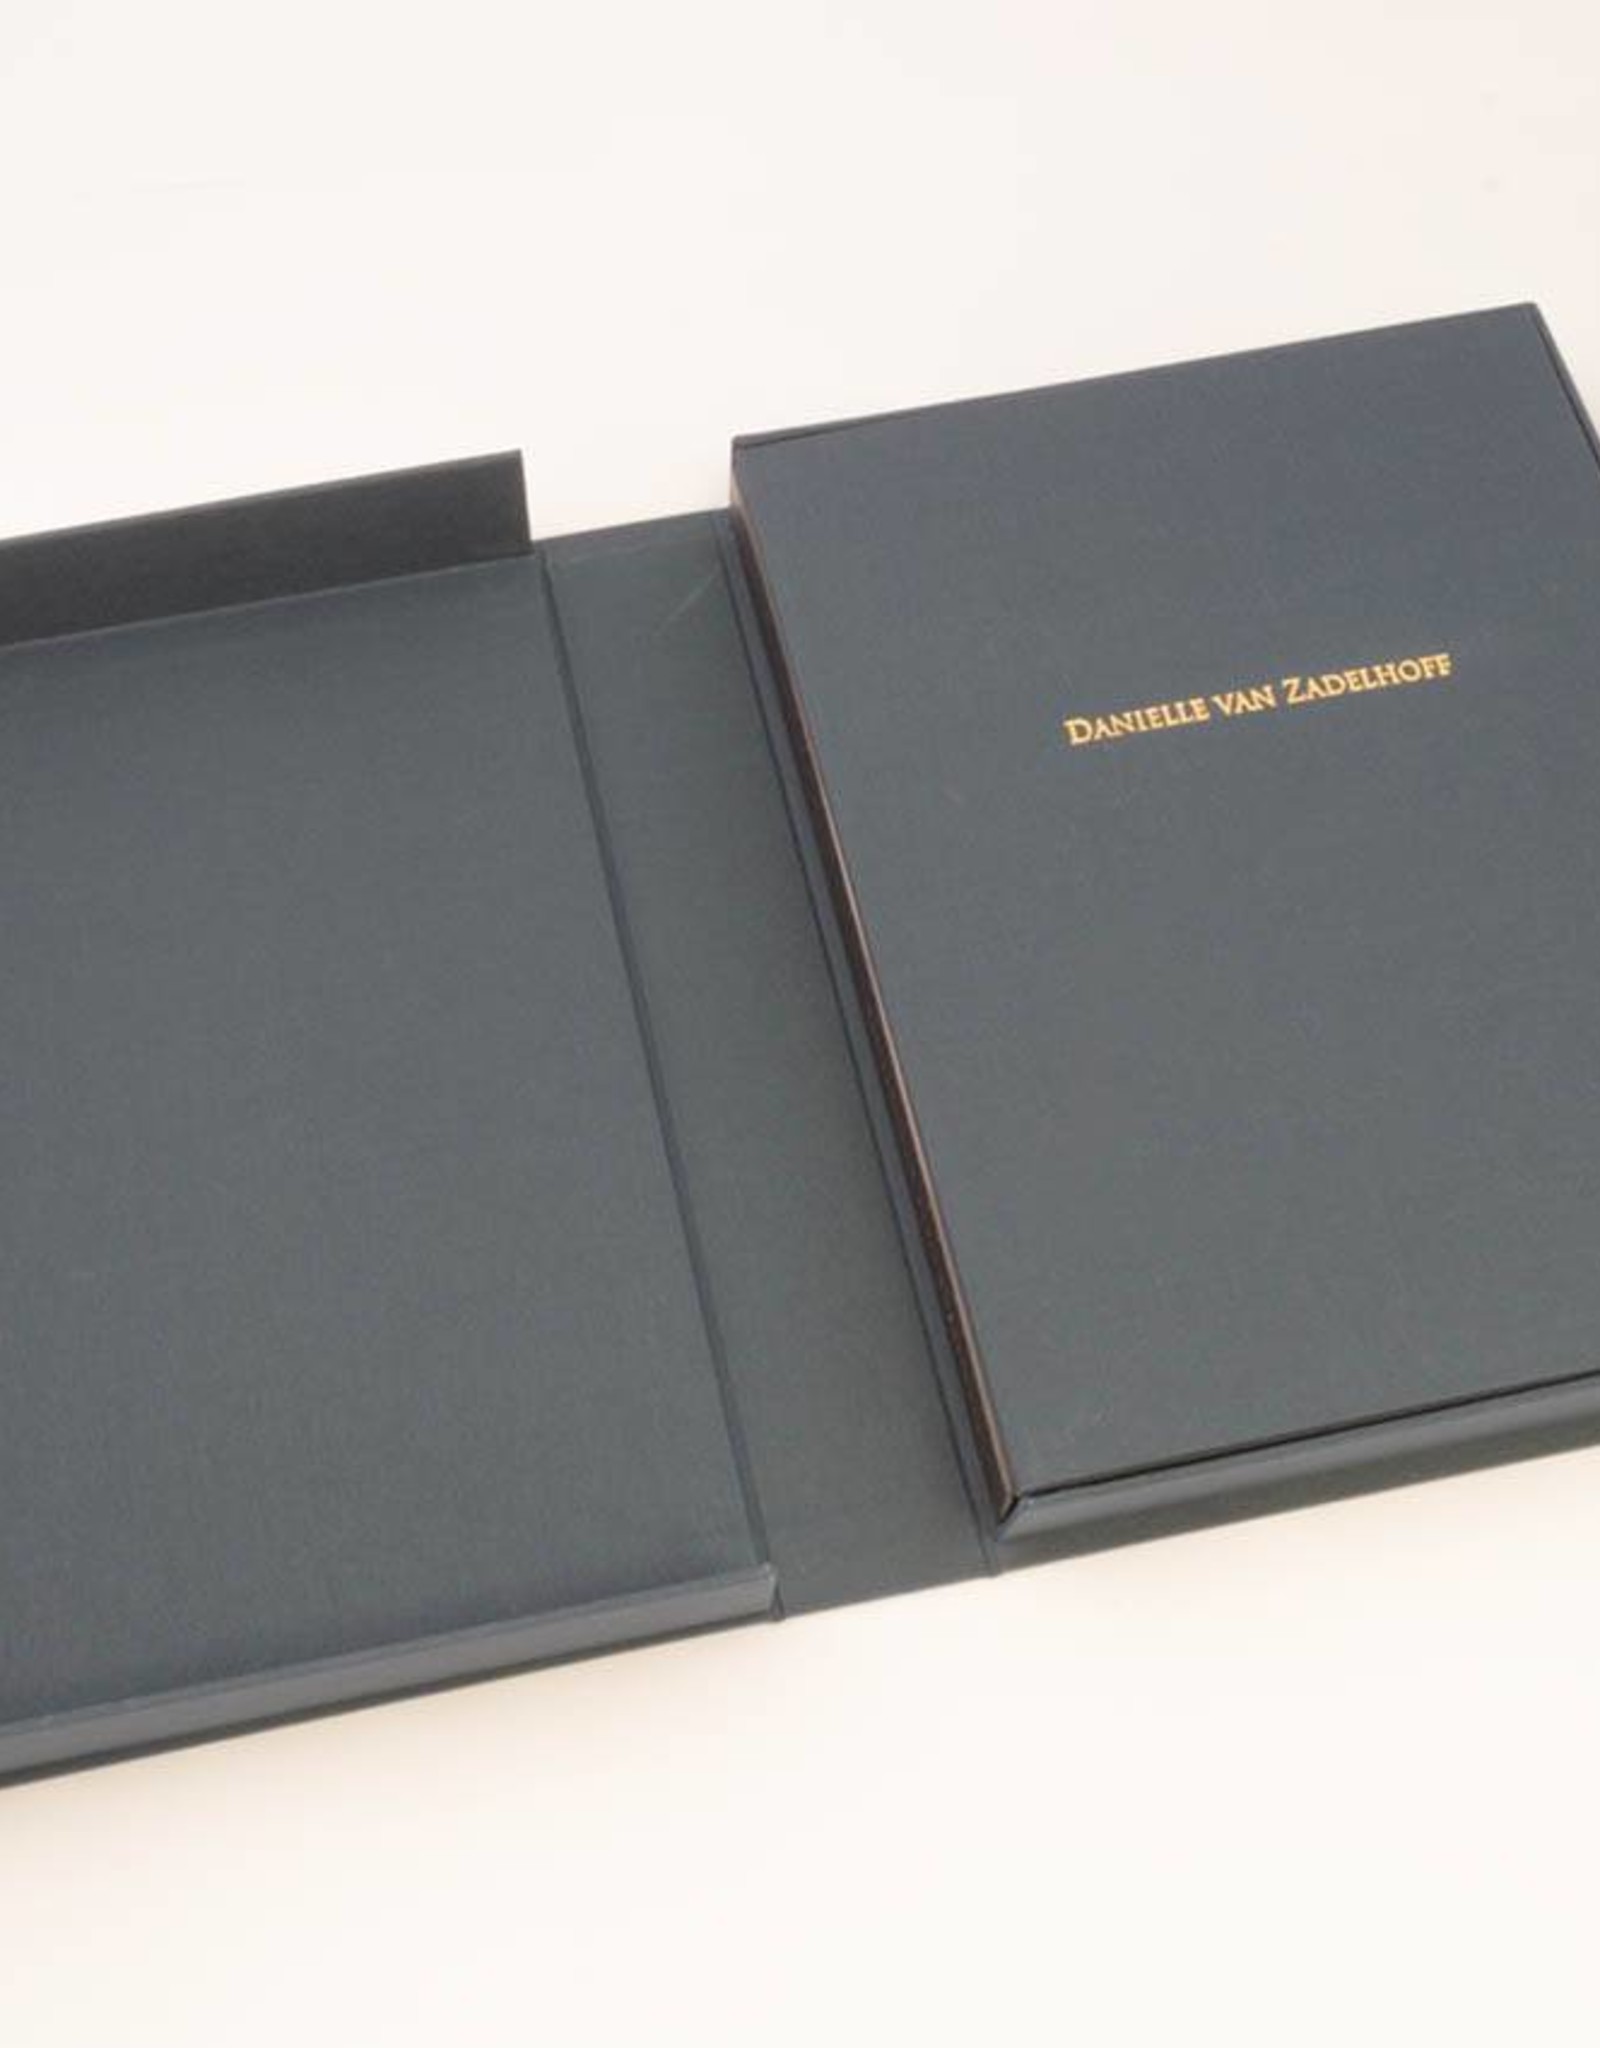 Edition Danielle van Zadelhoff: limited art print + monography